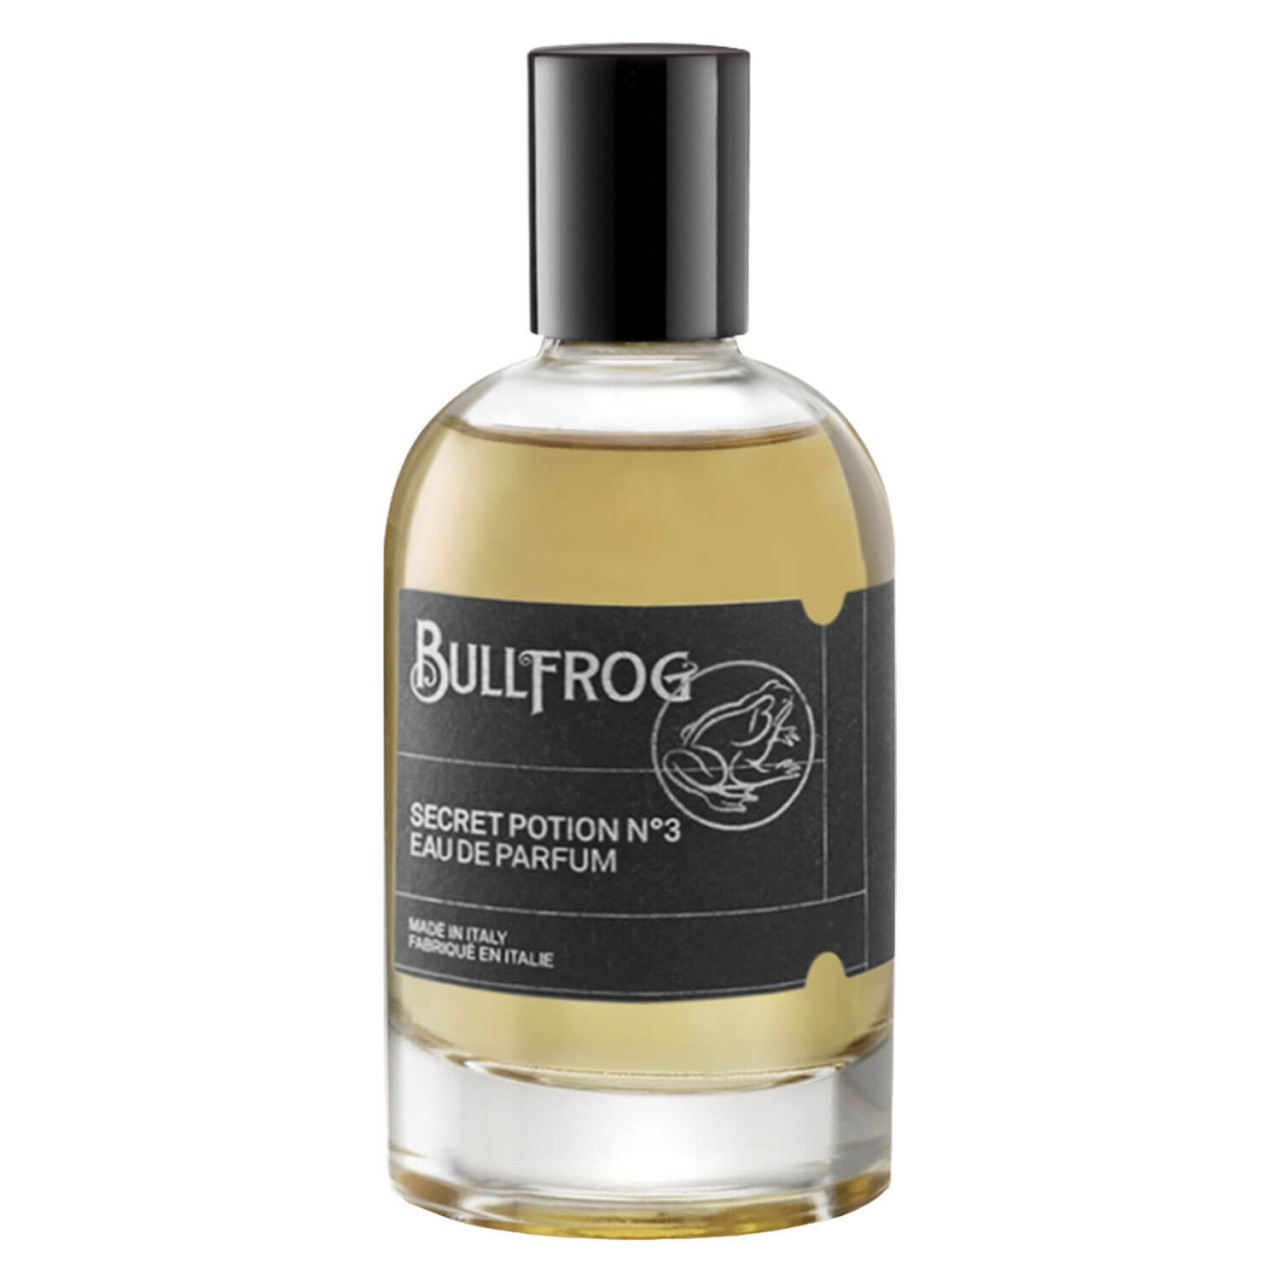 BULLFROG - Eau de Parfum Secret Potion N°3 von BULLFROG